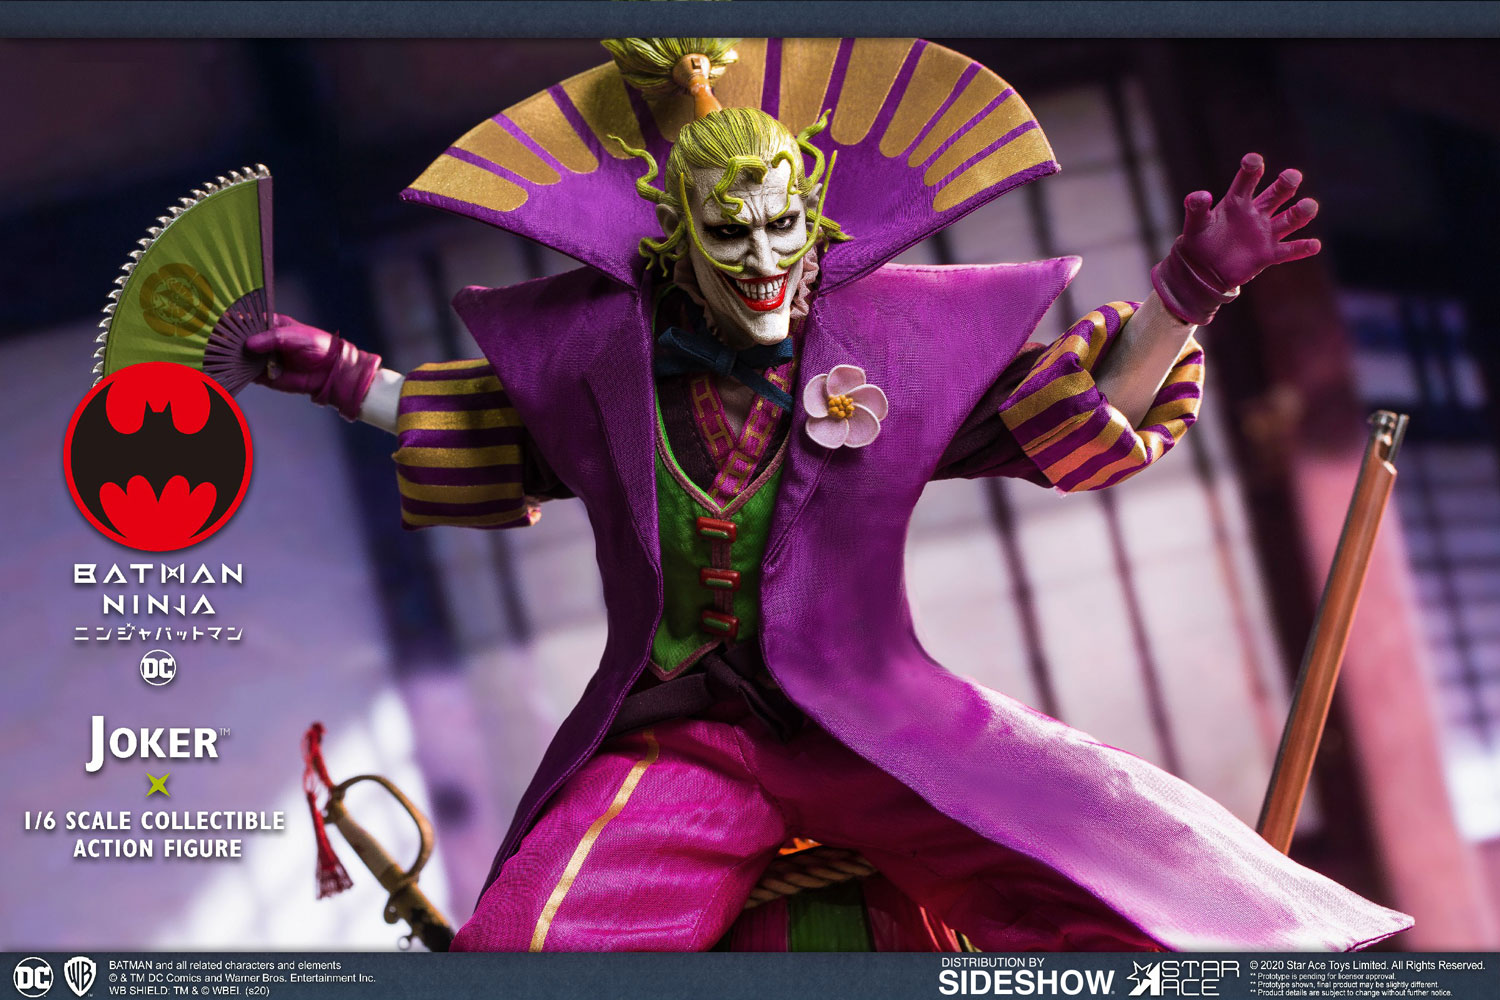 Lord Joker